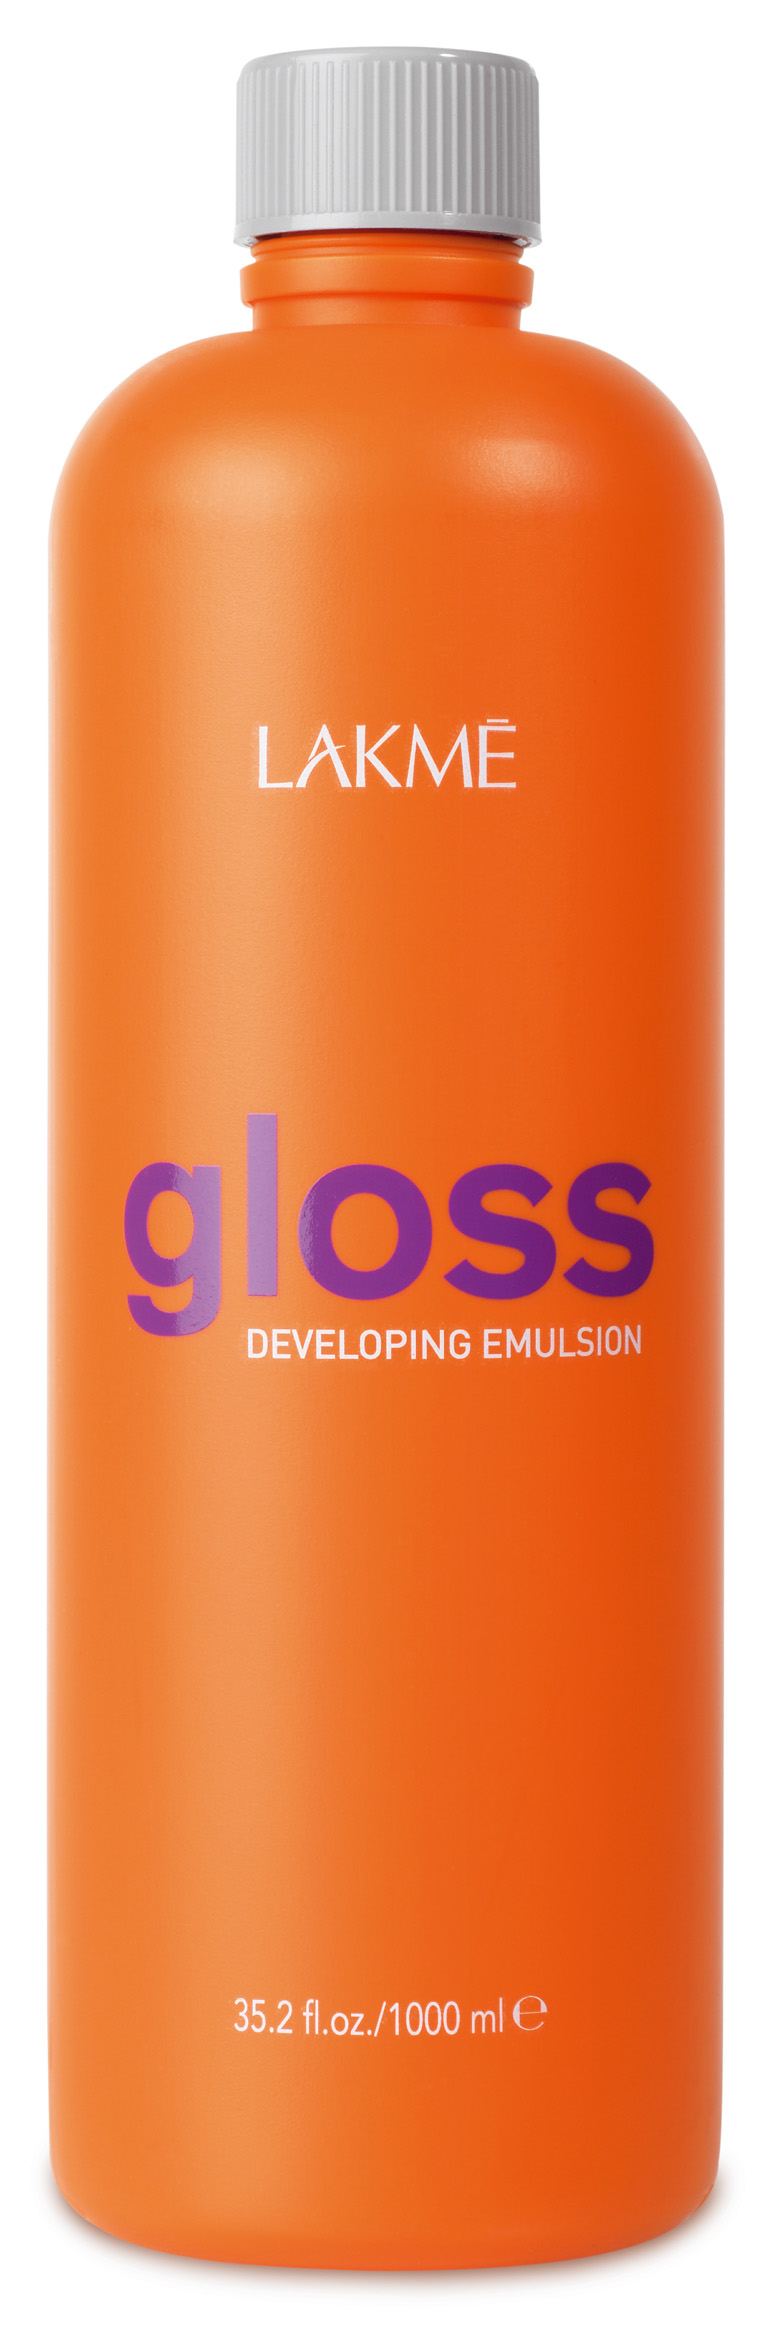 Проявляющая эмульсия. Gloss developing Emulsion long lasting 1.9 эмульсия. Эмульсия проявляющая длительного действия Lakme Gloss 6 Vol. - 1.9%. Lakme Gloss developing Emulsion как использовать. Проявляющая эмульсия 2,7% Матрикс купить.